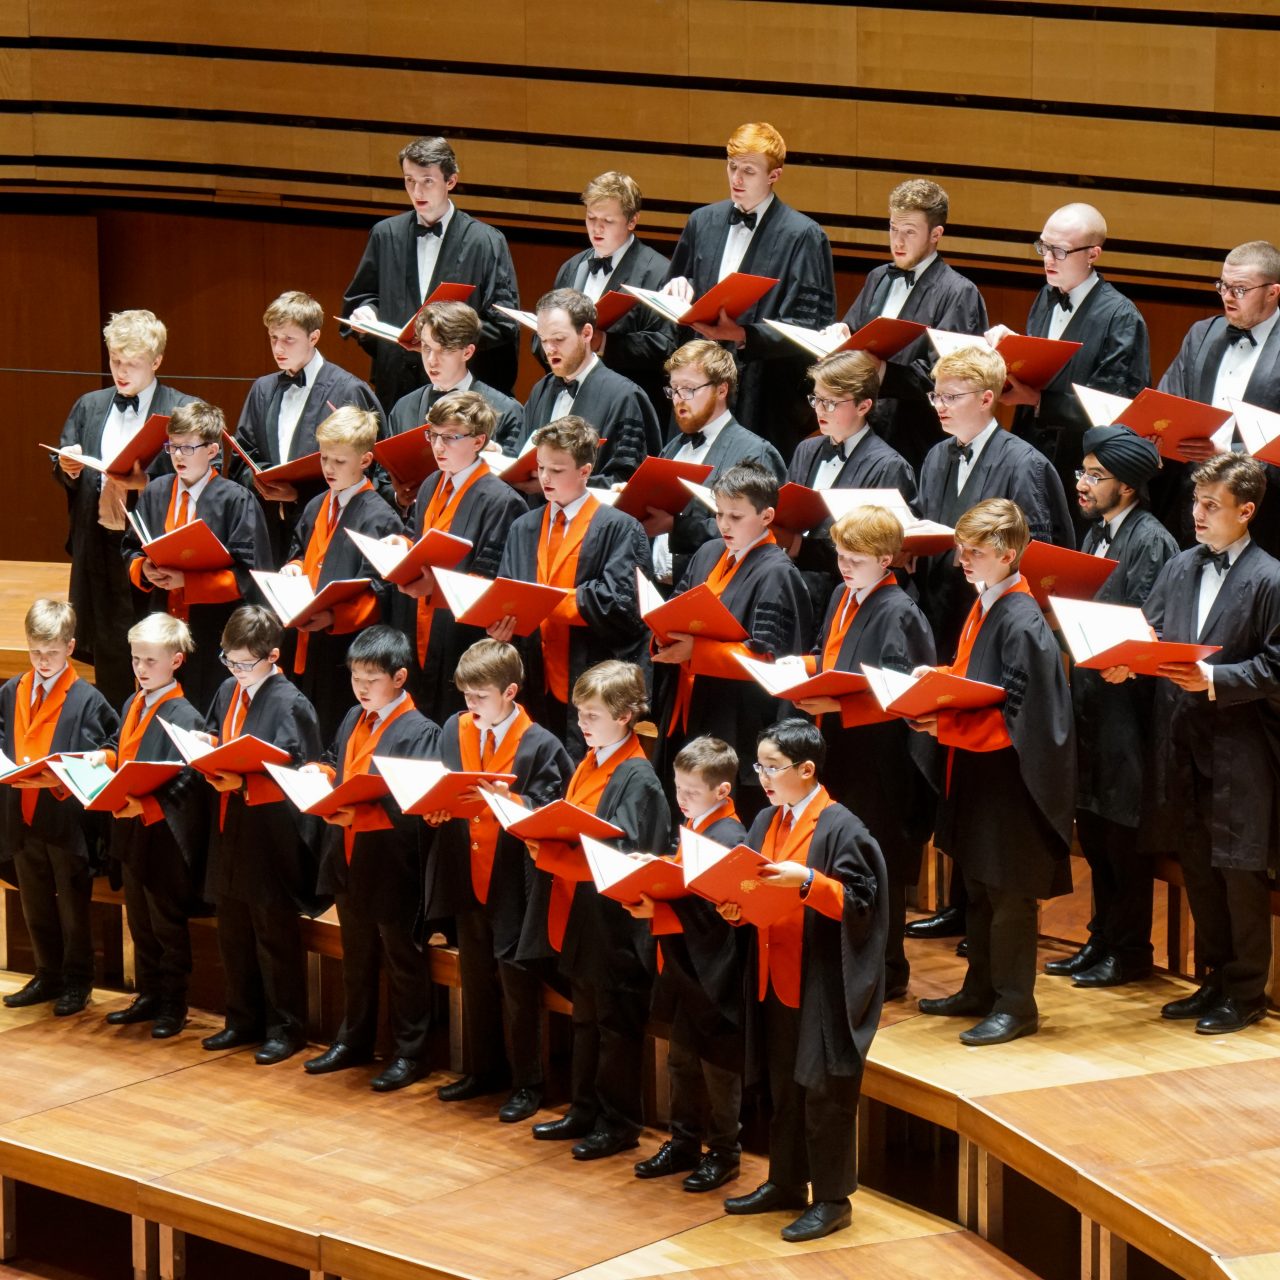 The Choir of St John’s College o.l.v. Christopher Gray